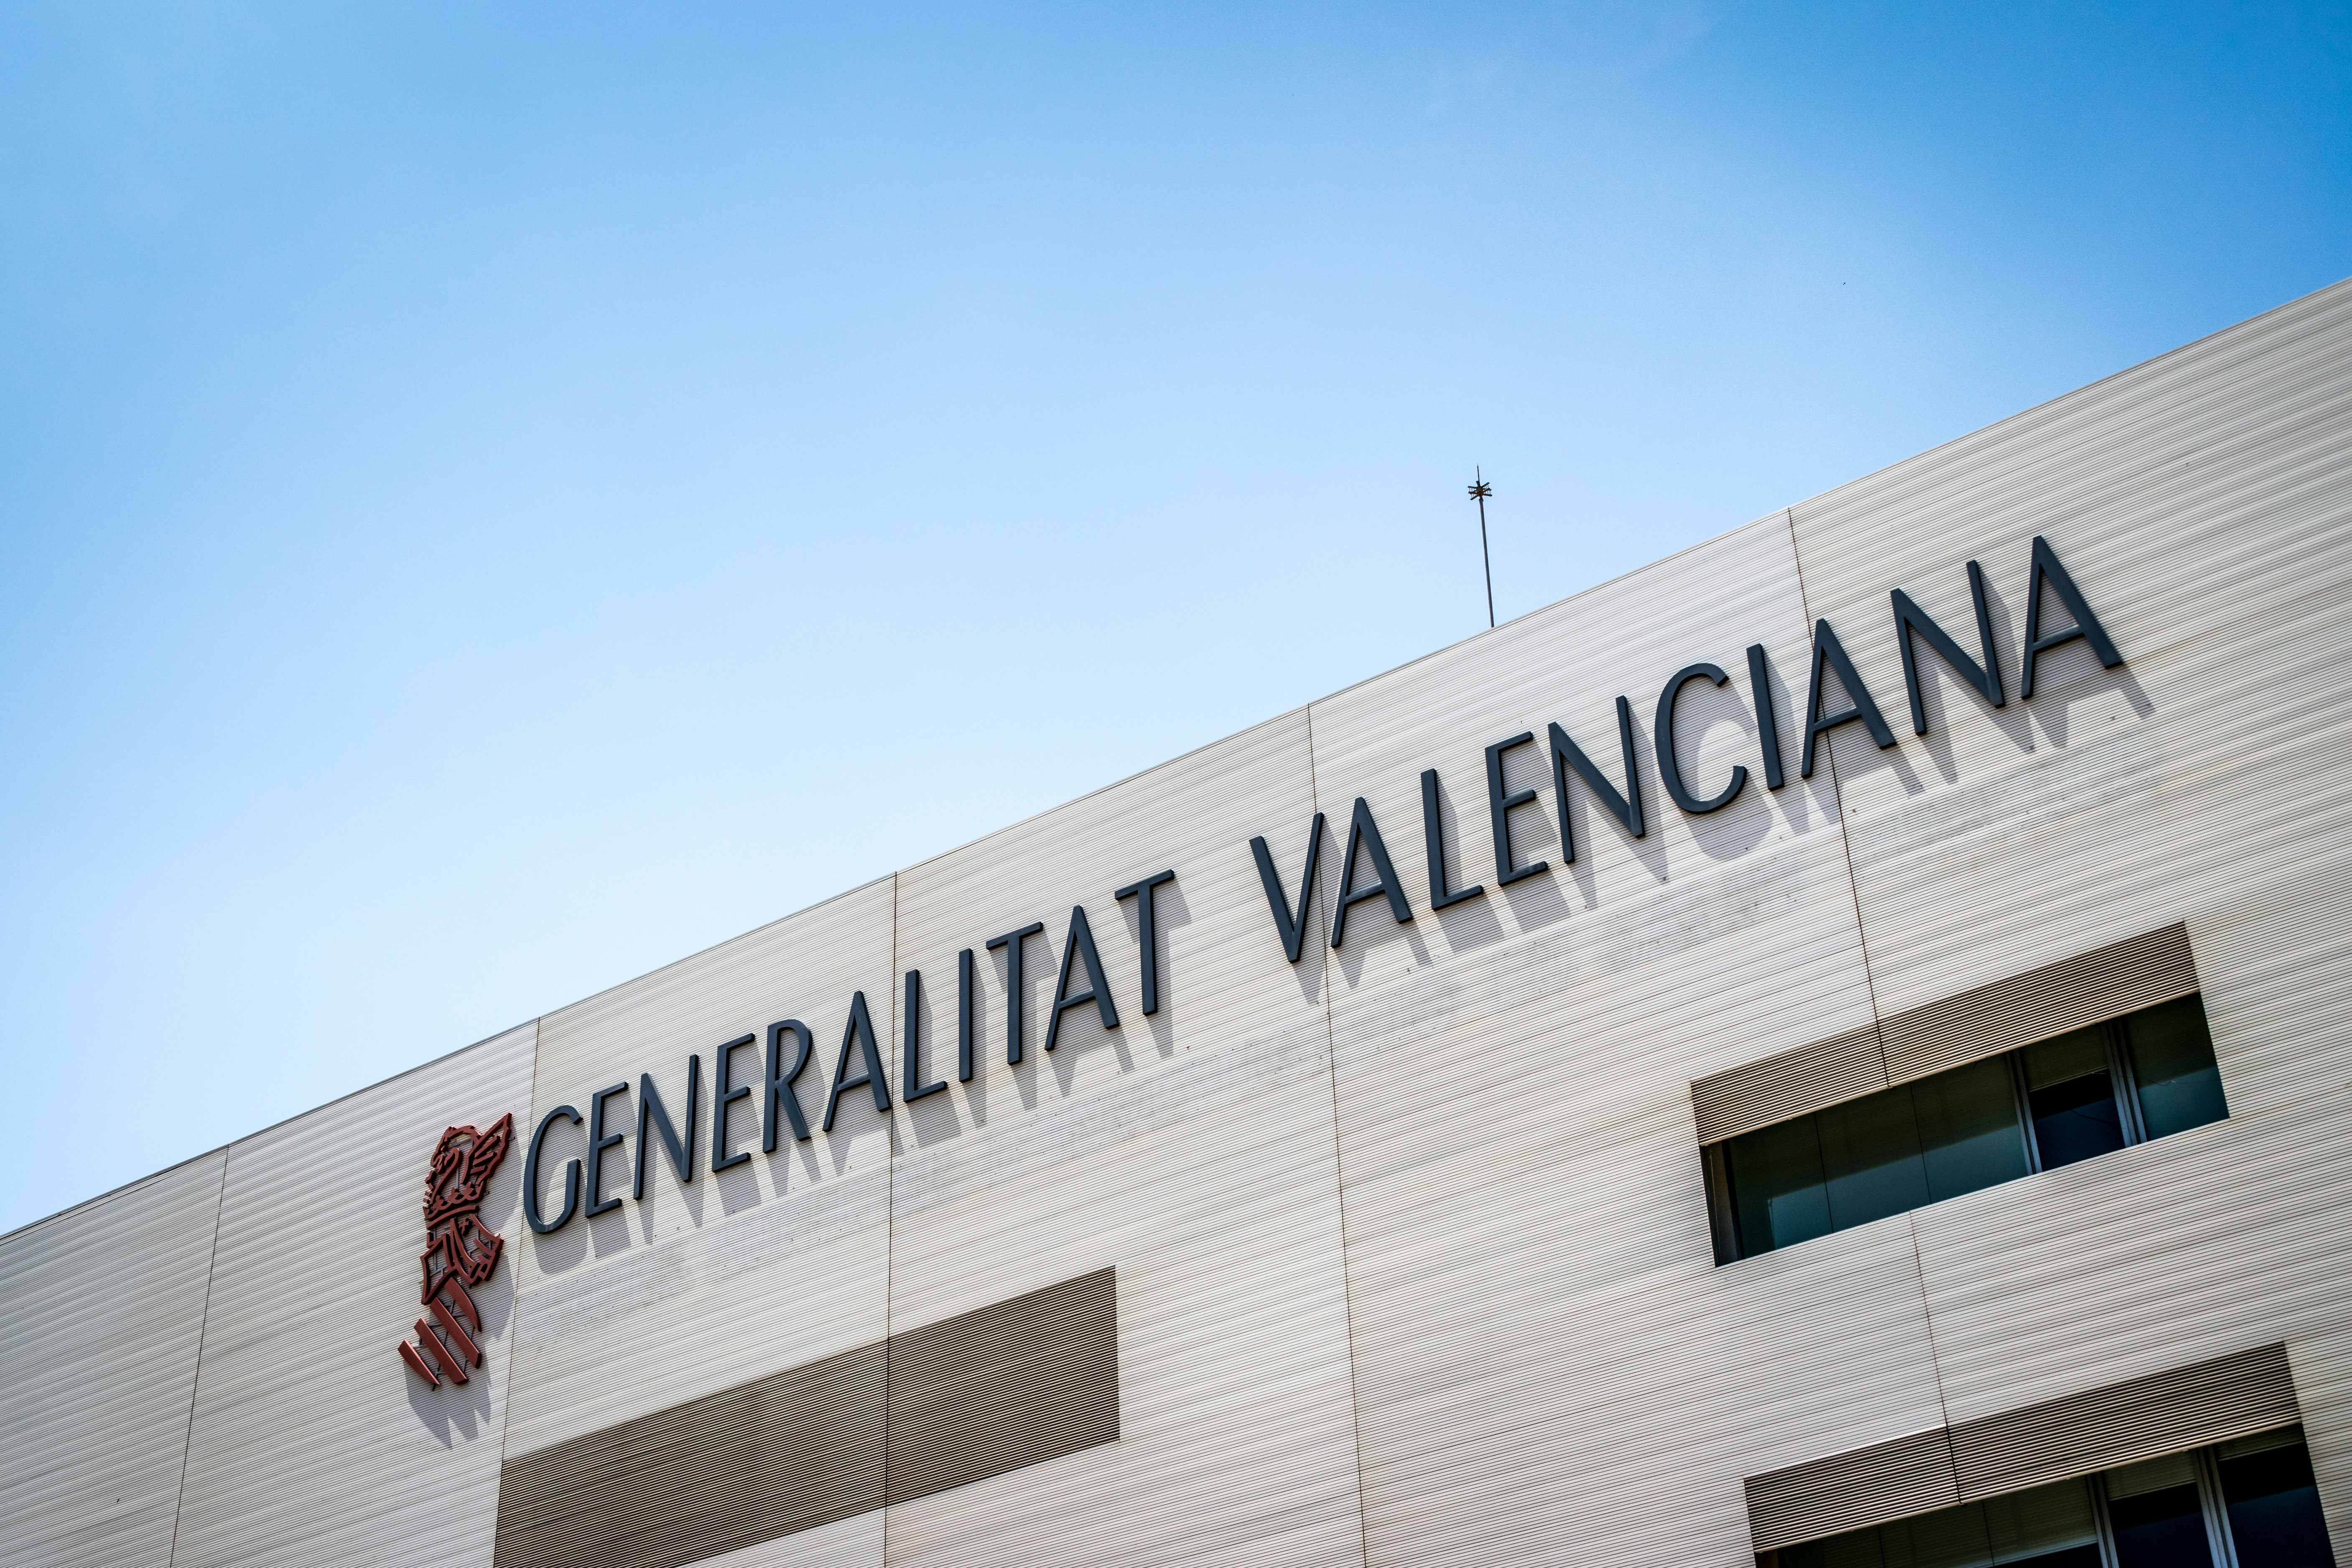 Generalitat Valencia - love the typeface.